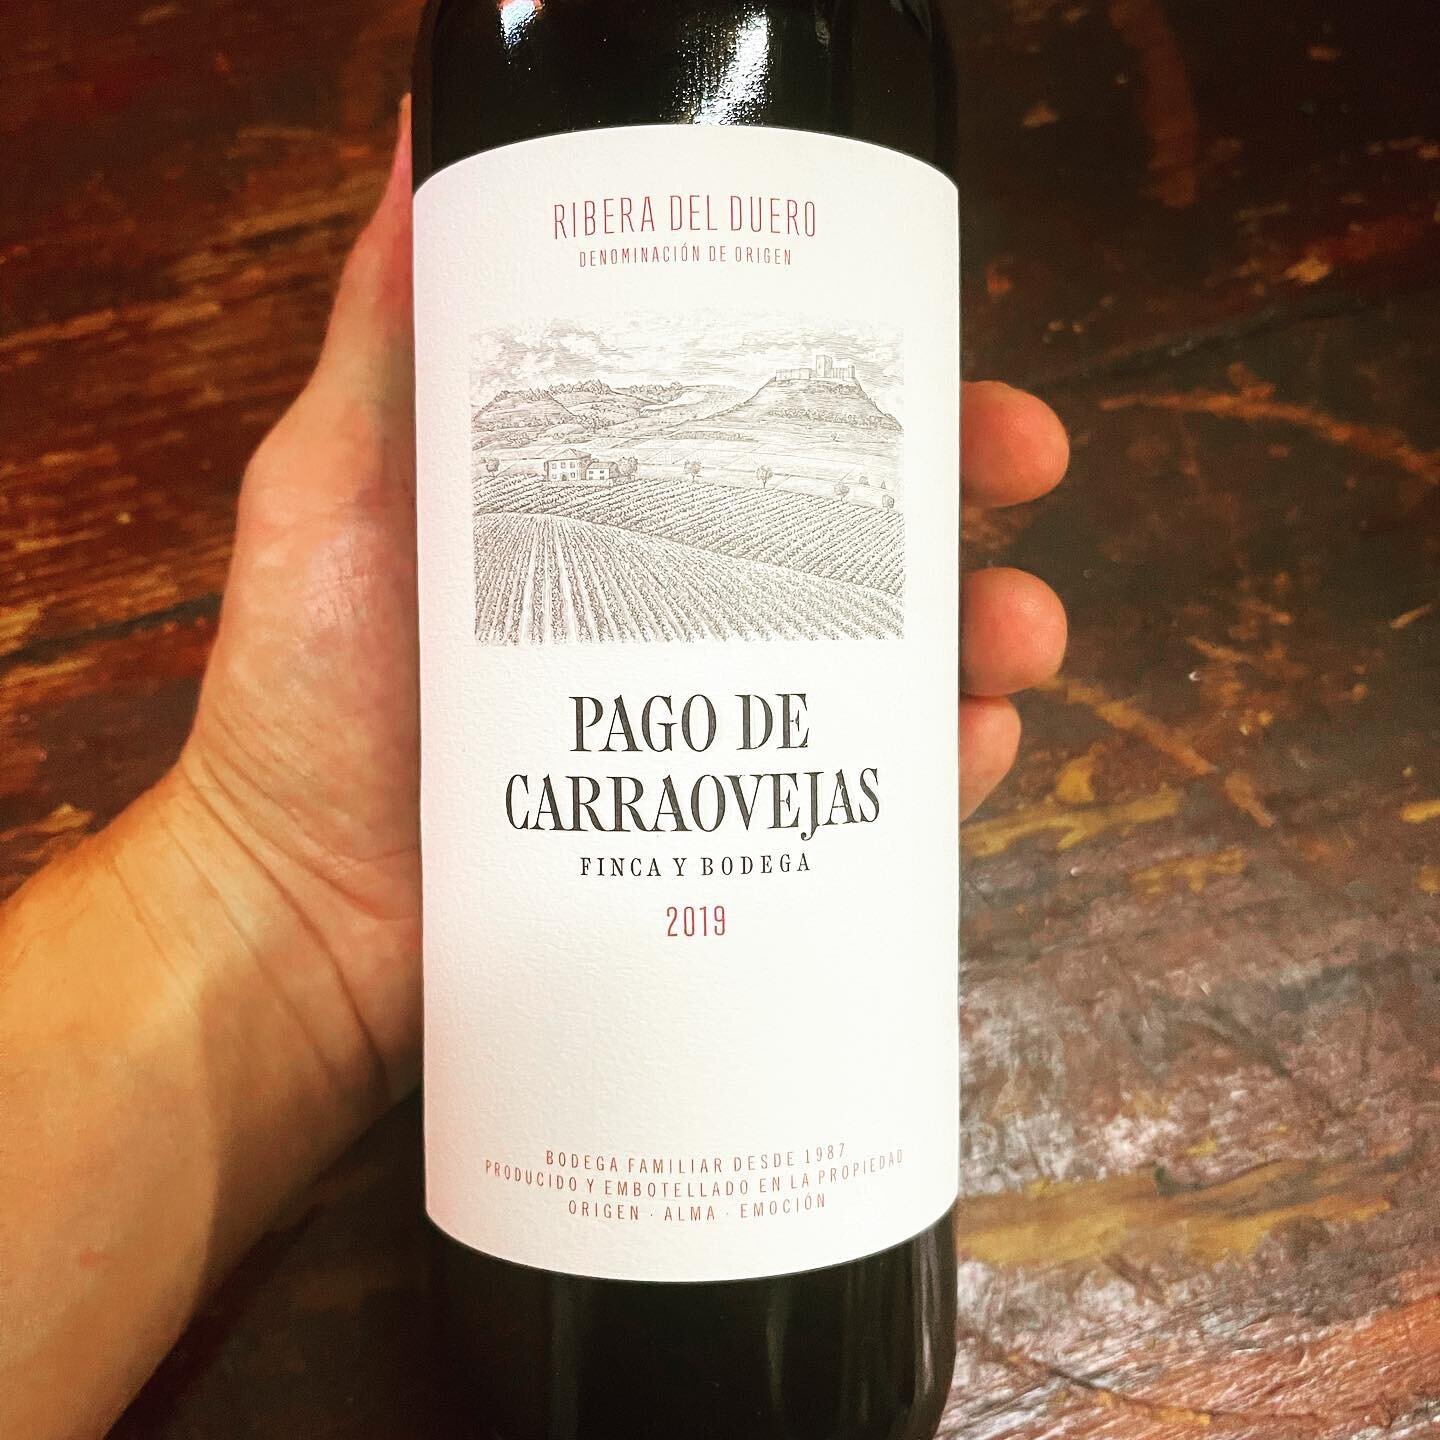 Pago de Carraovejas, 2019
D.O. Ribera del Duero

#vino #wine #winelover #winelovers #vinontinto #riberadelduero #vinosdeespa&ntilde;a🇪🇸